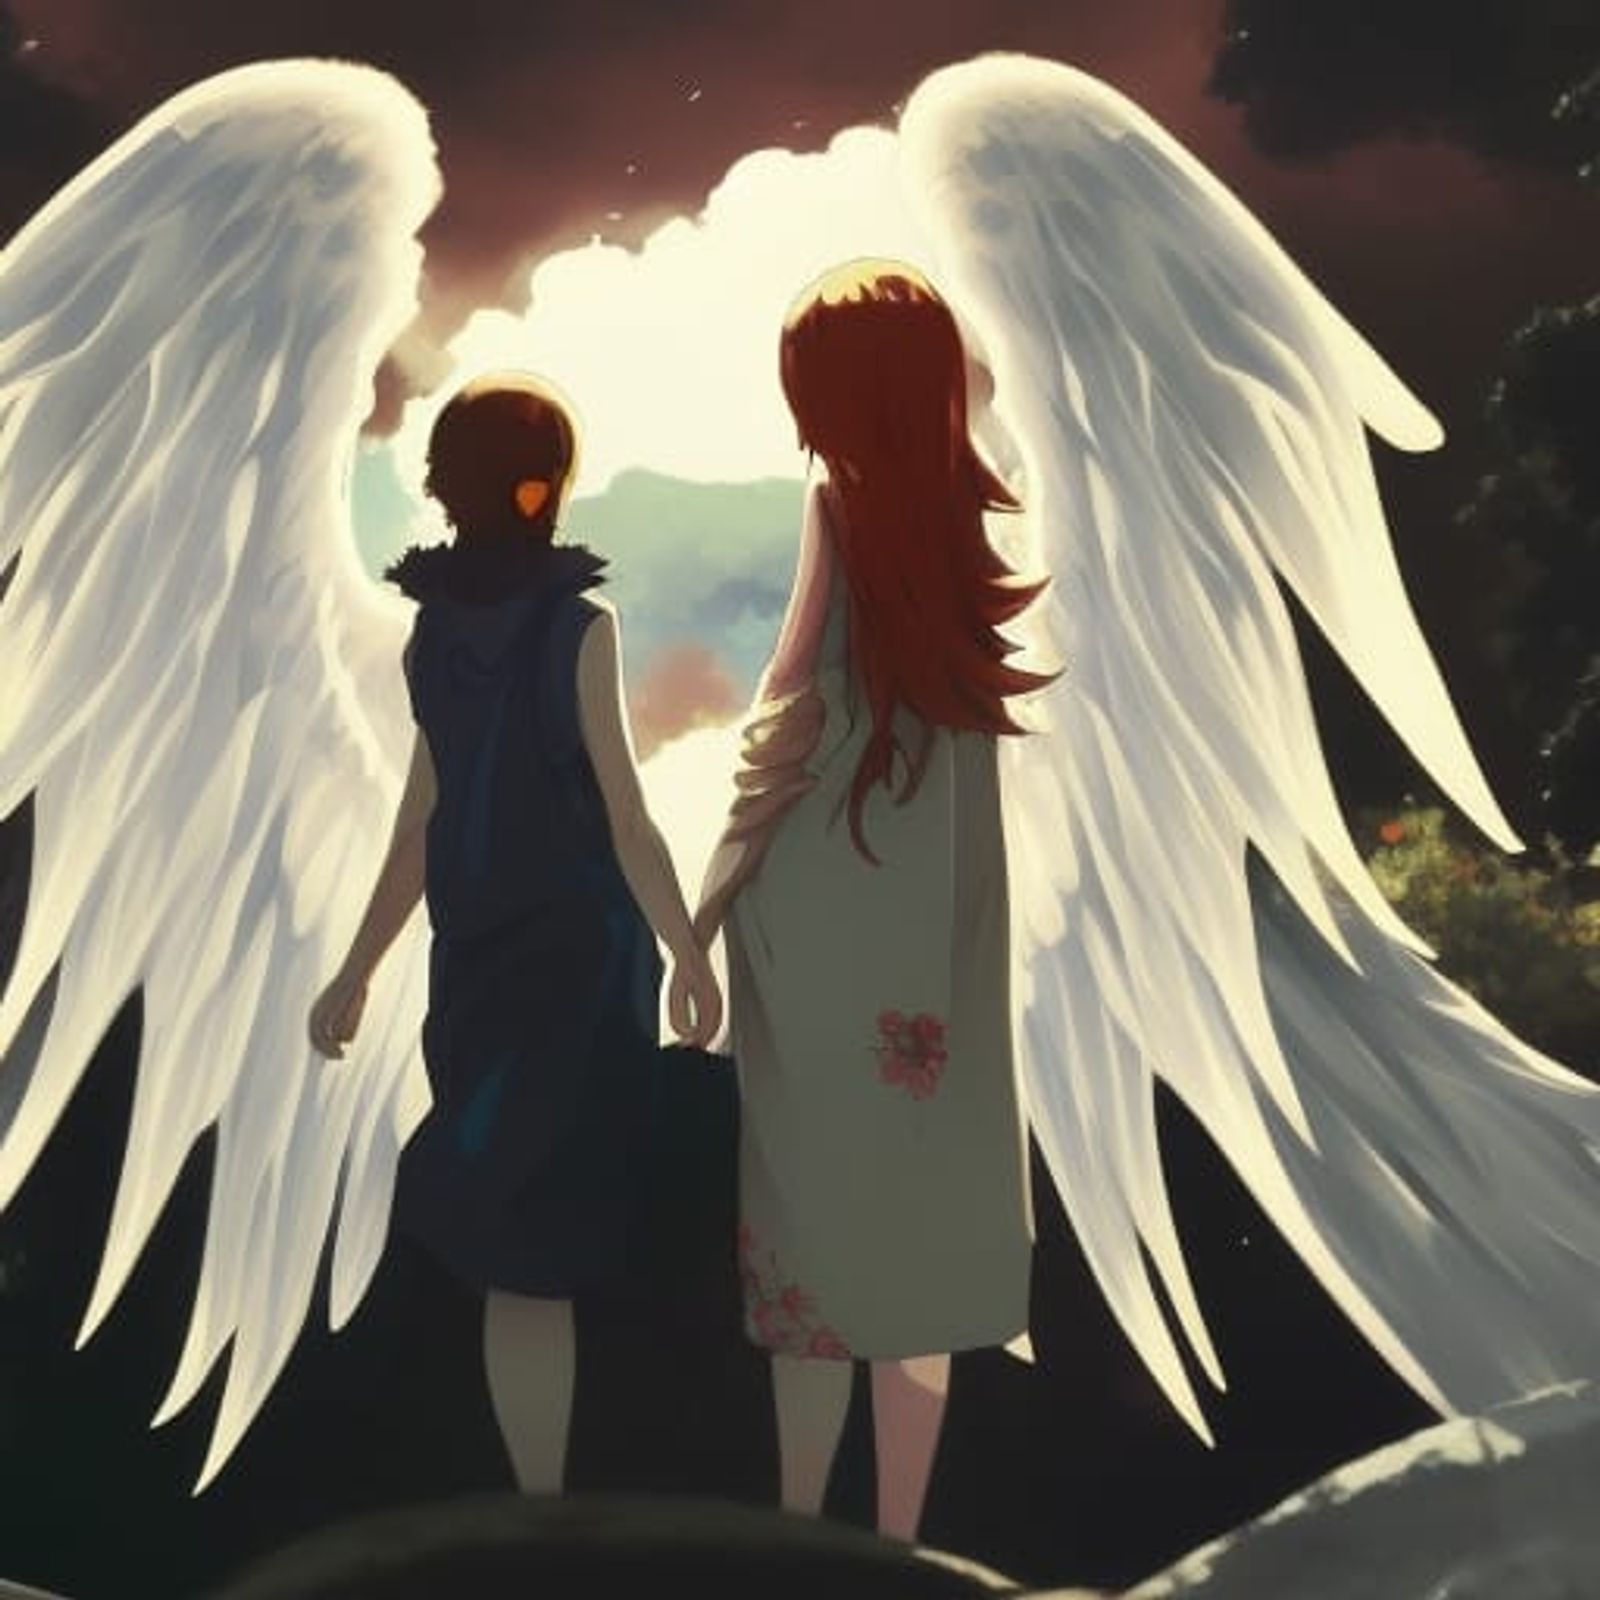 anime angel boy and demon girl love